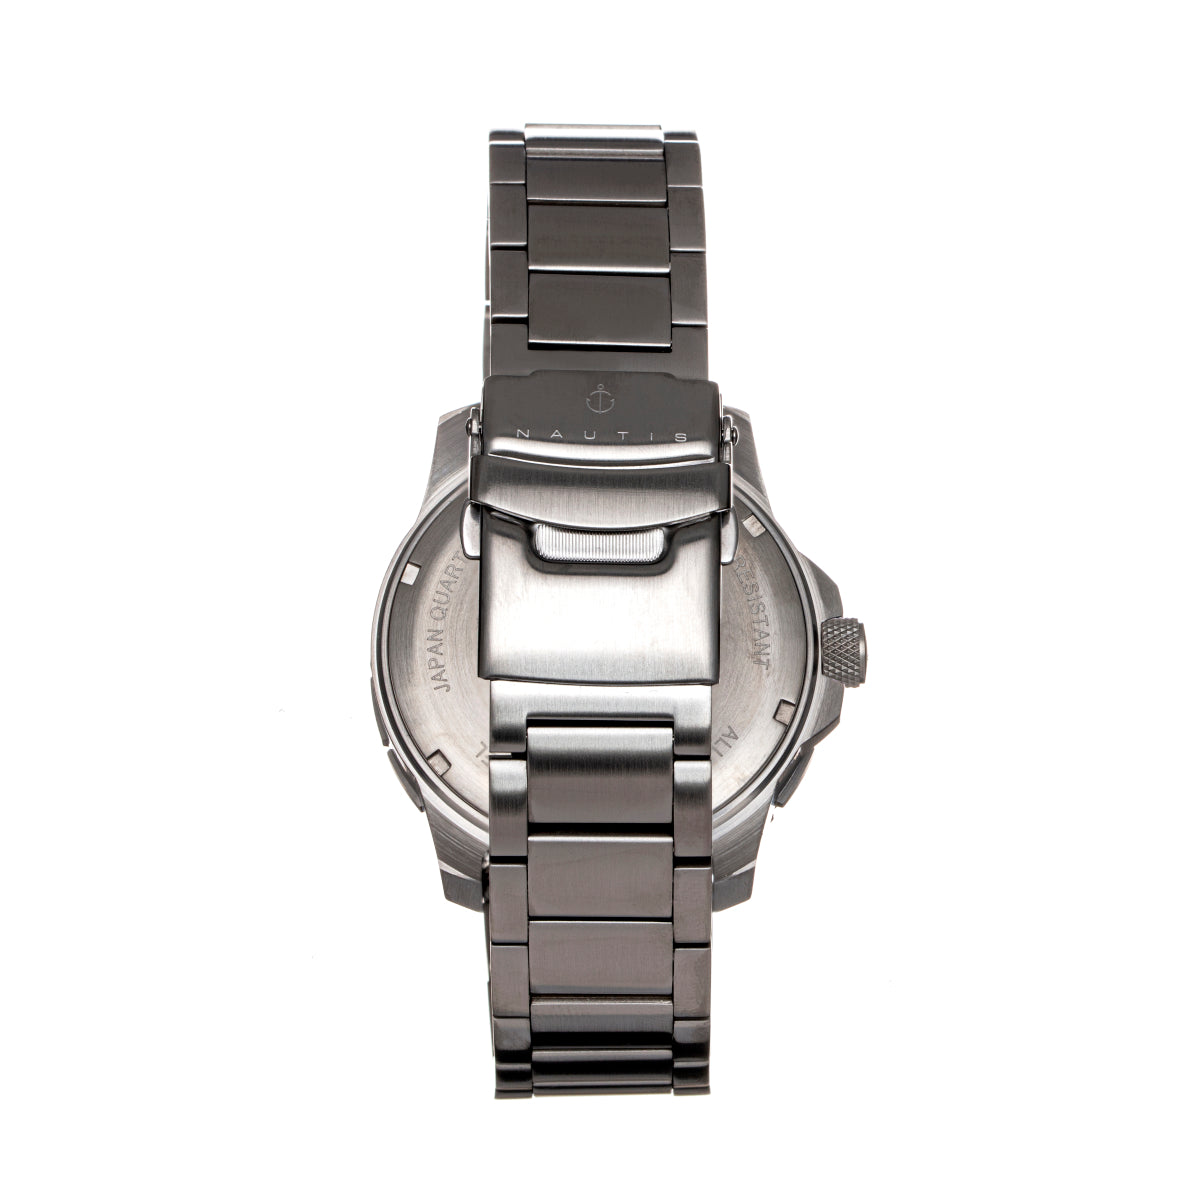 Nautis Admiralty Pro 200 Bracelet Watch w/Date - Black/White  - GL2008-B